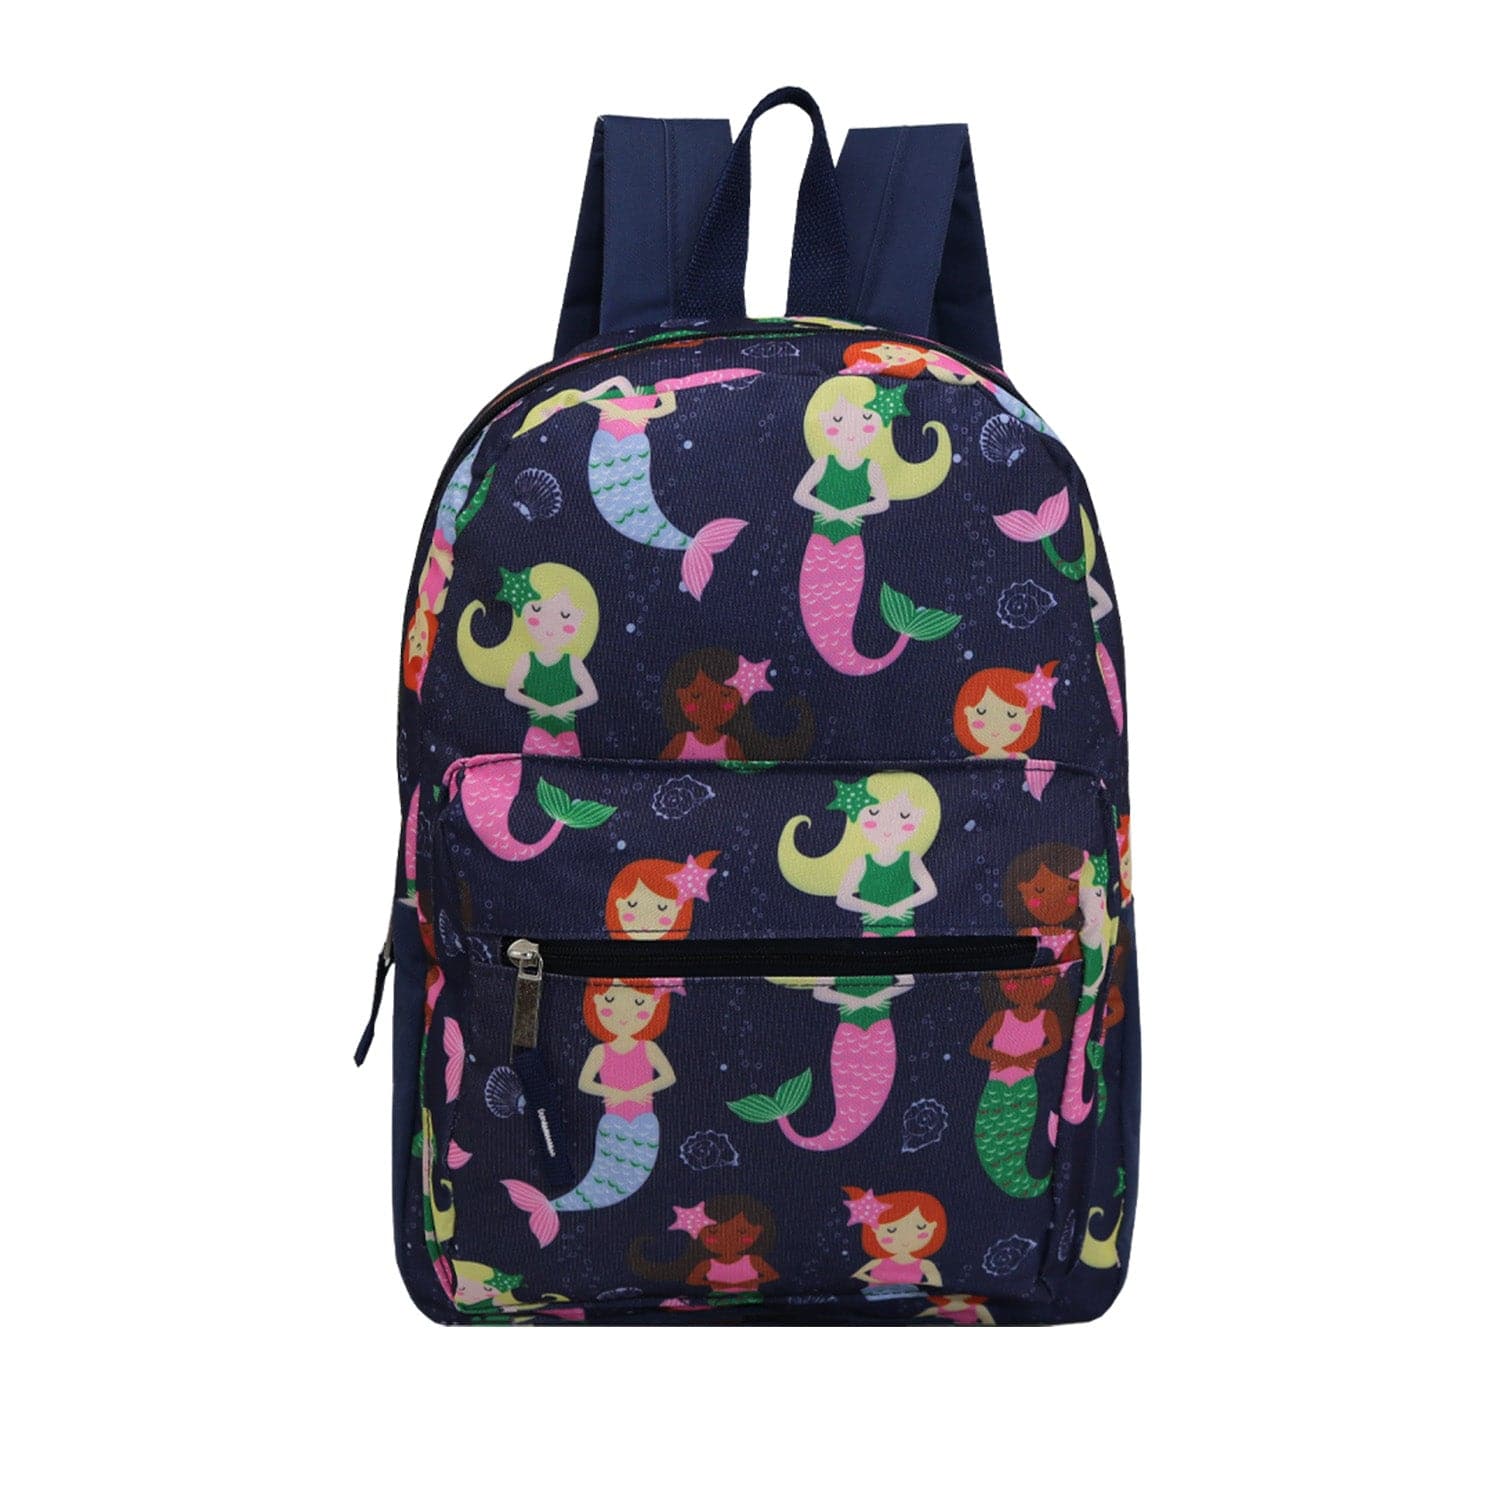 15" Kids Basic Wholesale Backpack in Assorted Prints - Bulk Case of 24